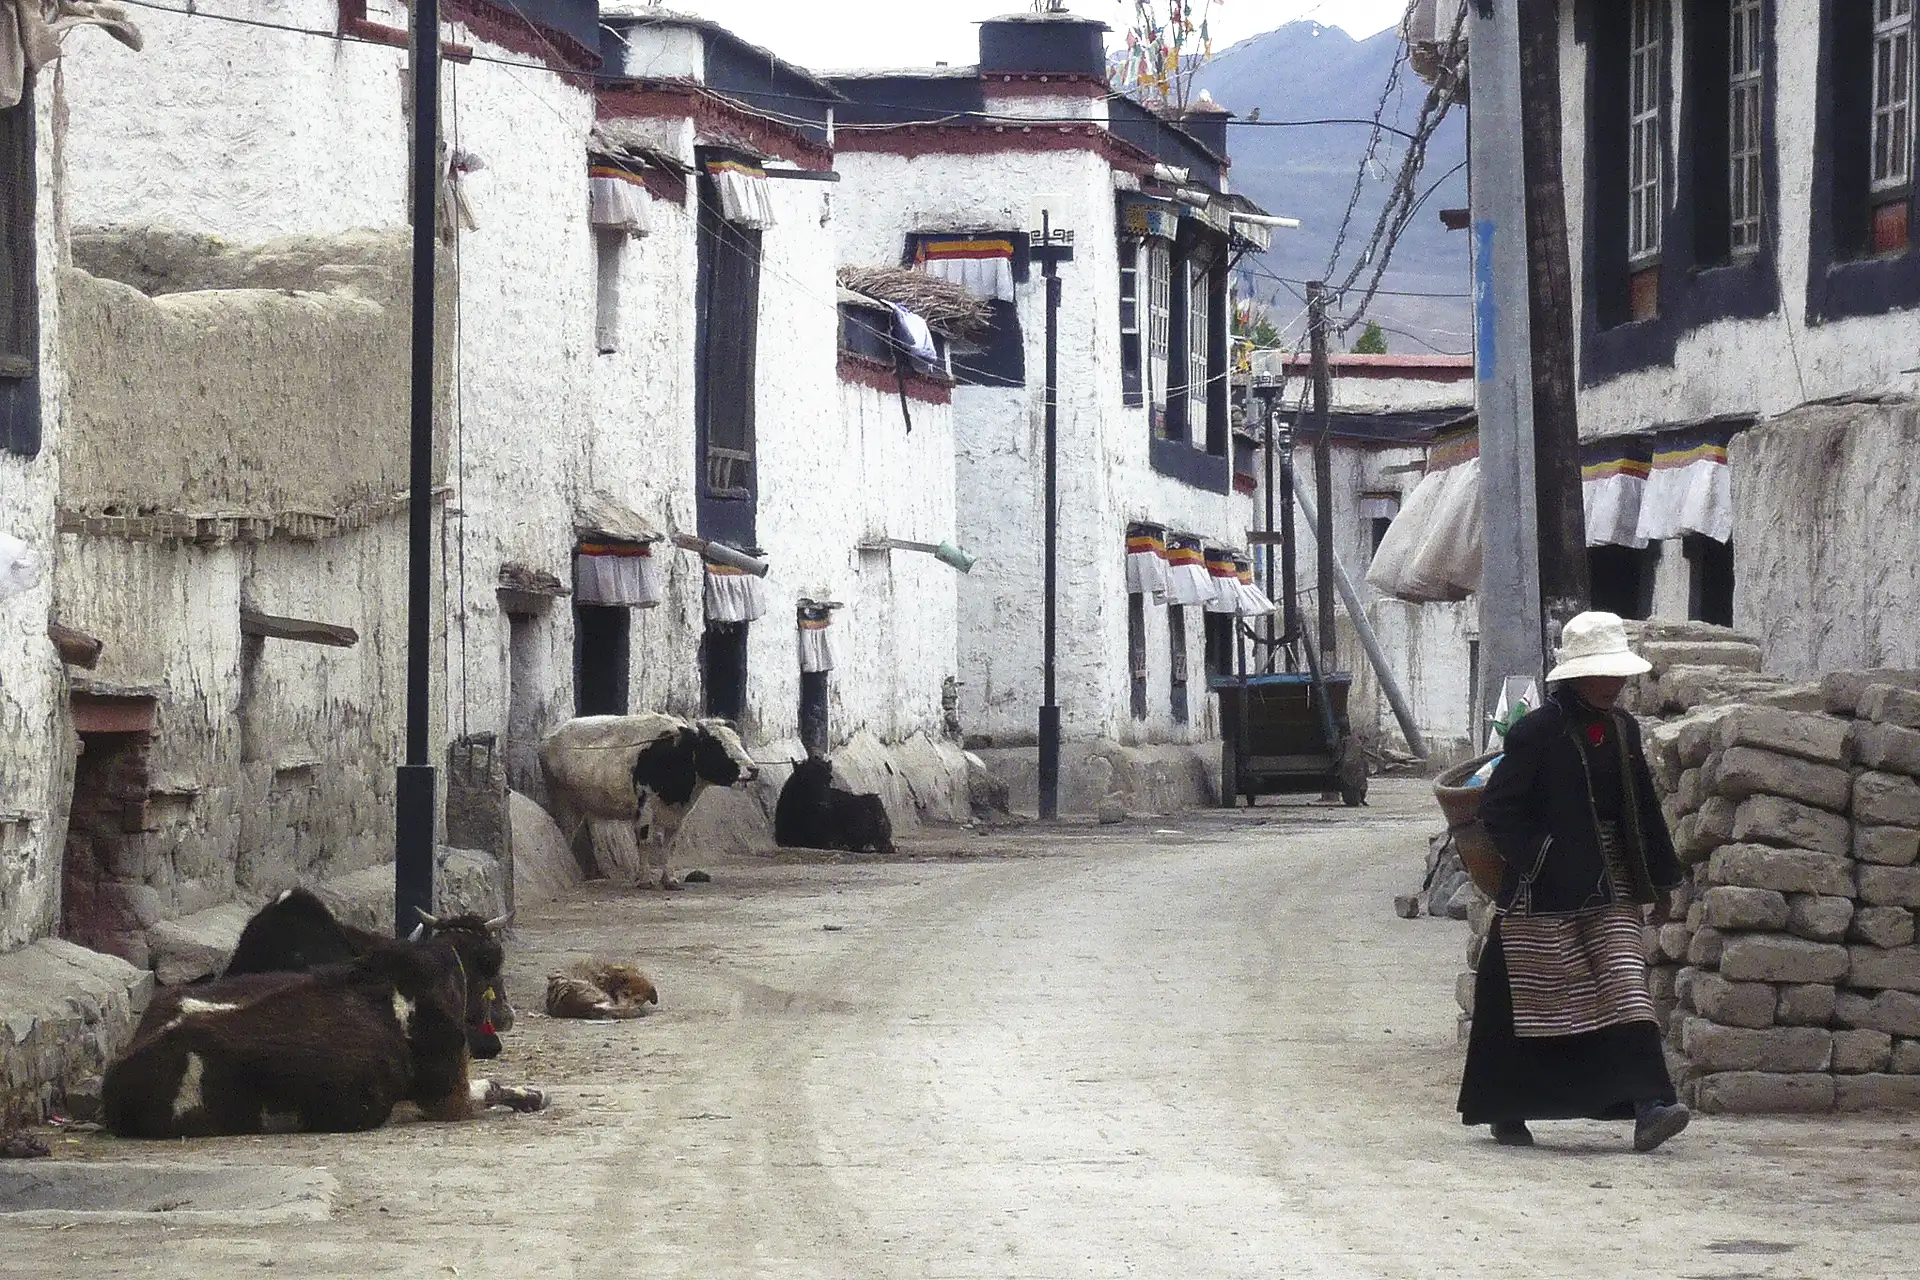 Mujer tibetana de espaldas en las calles de Gyantse - viaje al Tibet en tren